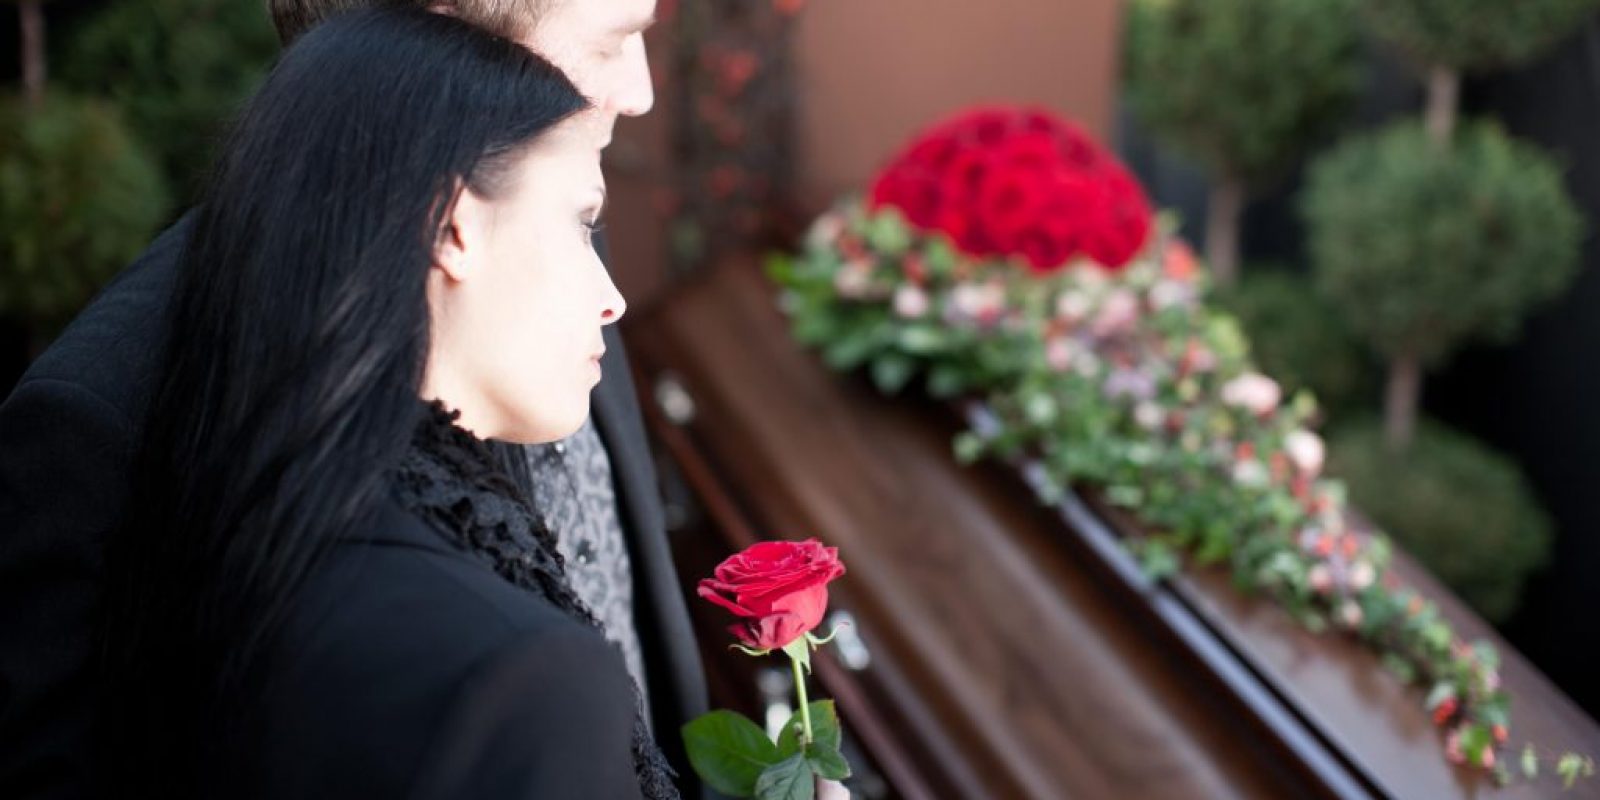 Paar bei Beerdigung mit Sarg